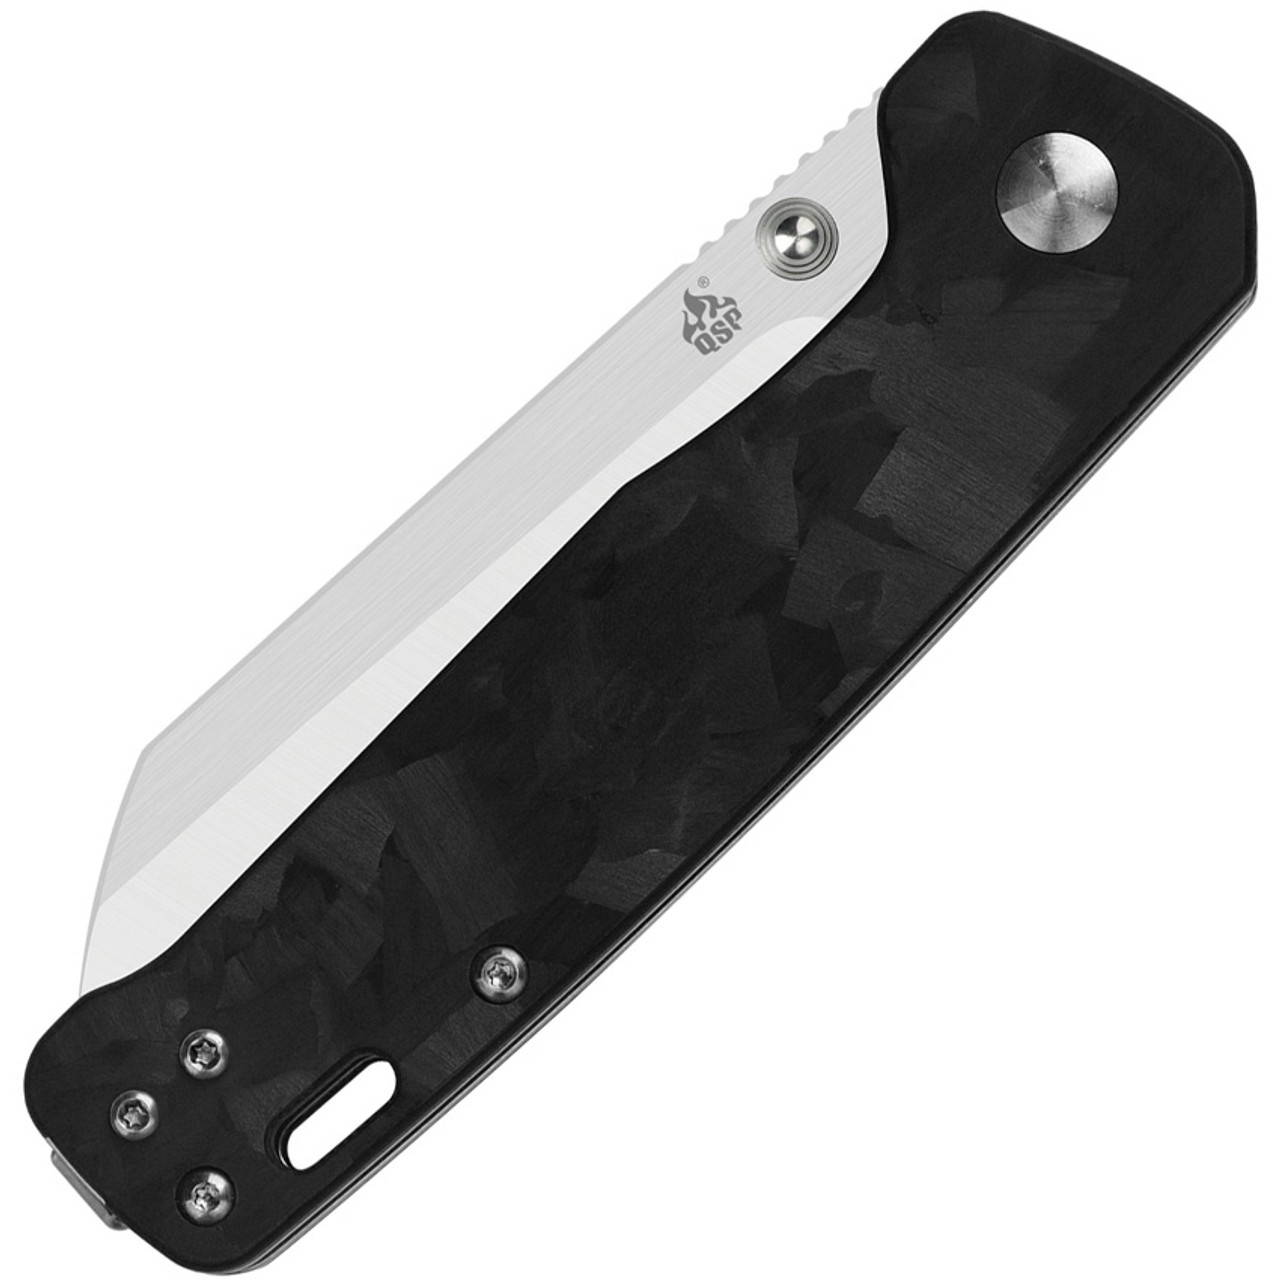 QSP Knife  Penguin Linerlock. D2. Black G10 handle with shredded carbon fiber overlay. 